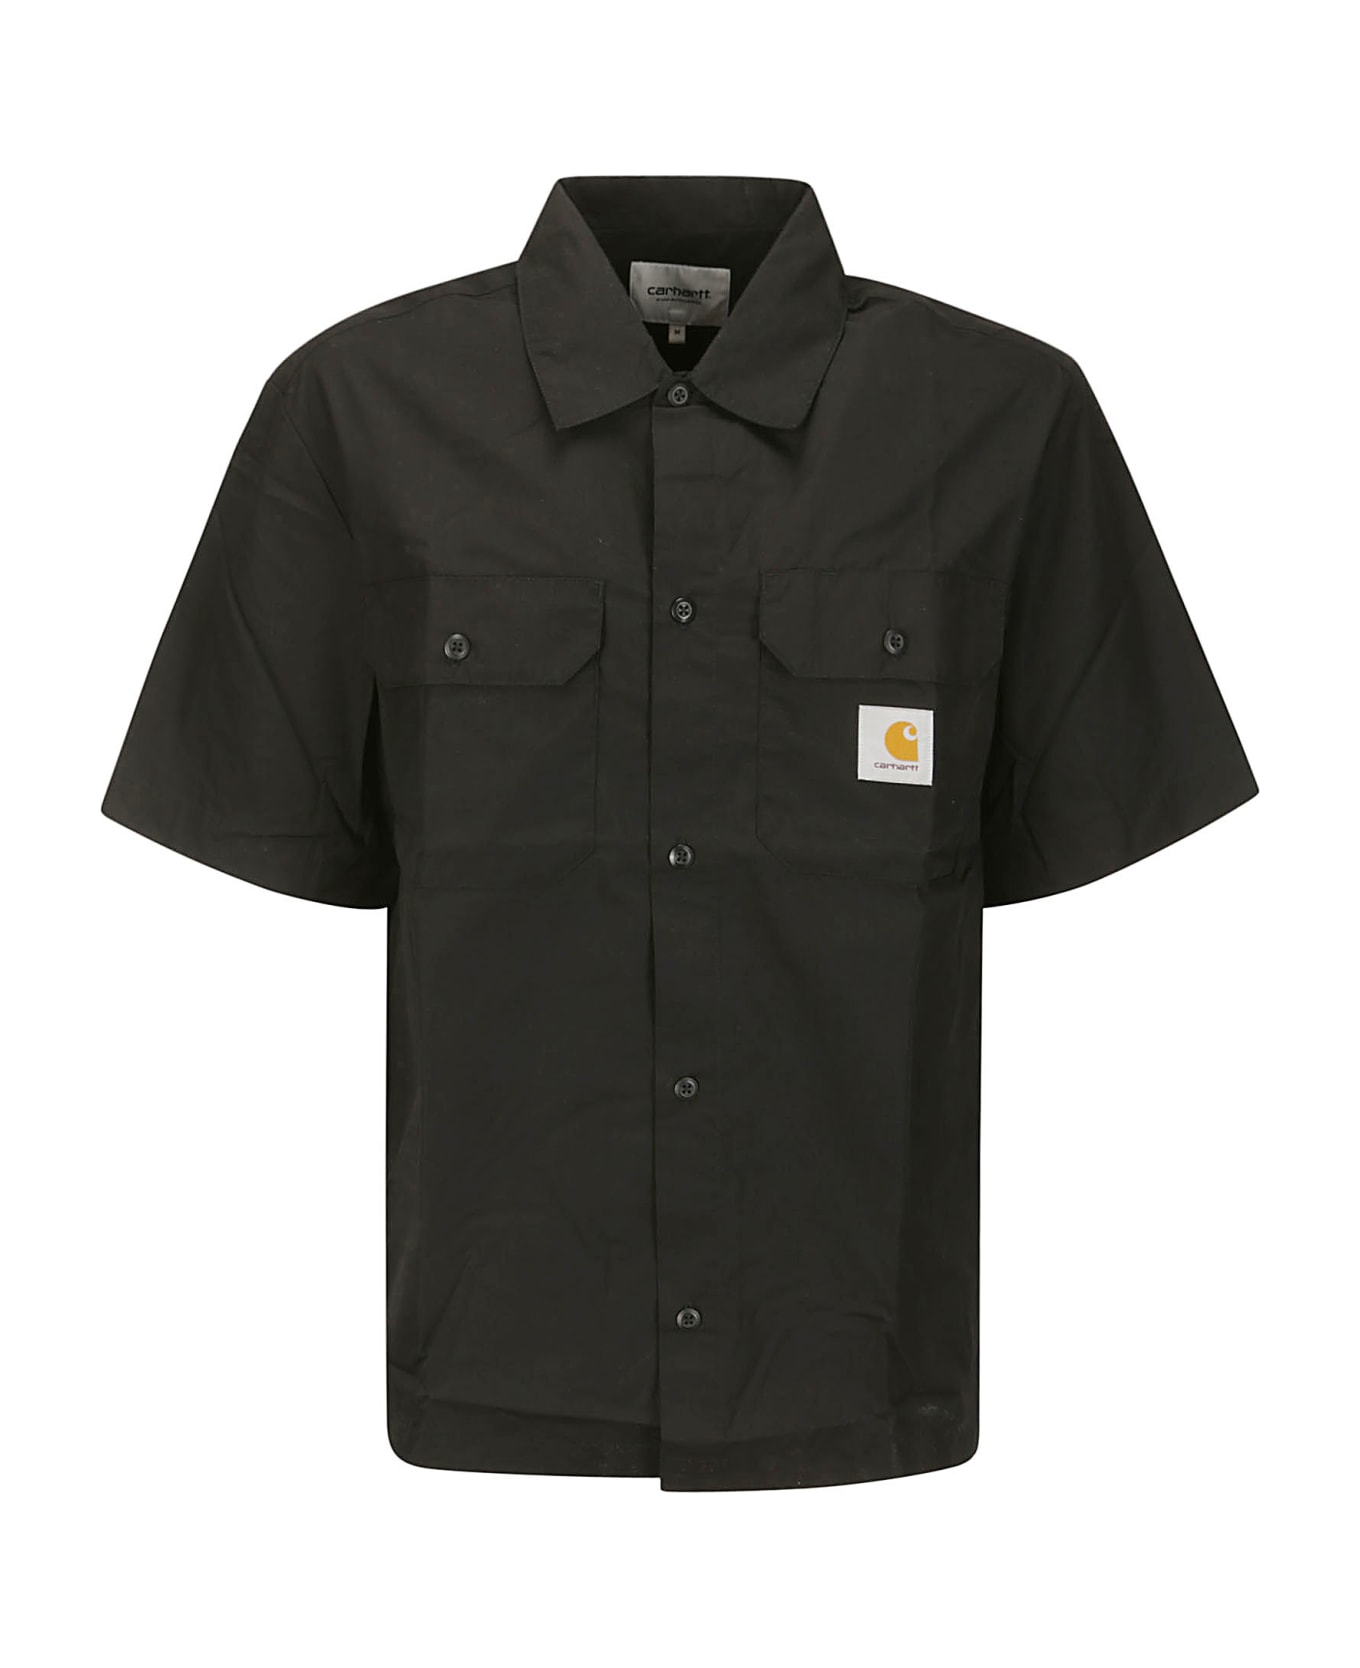 Carhartt S/s Craft Shirt Polyester/cotton Poplin - BLACK